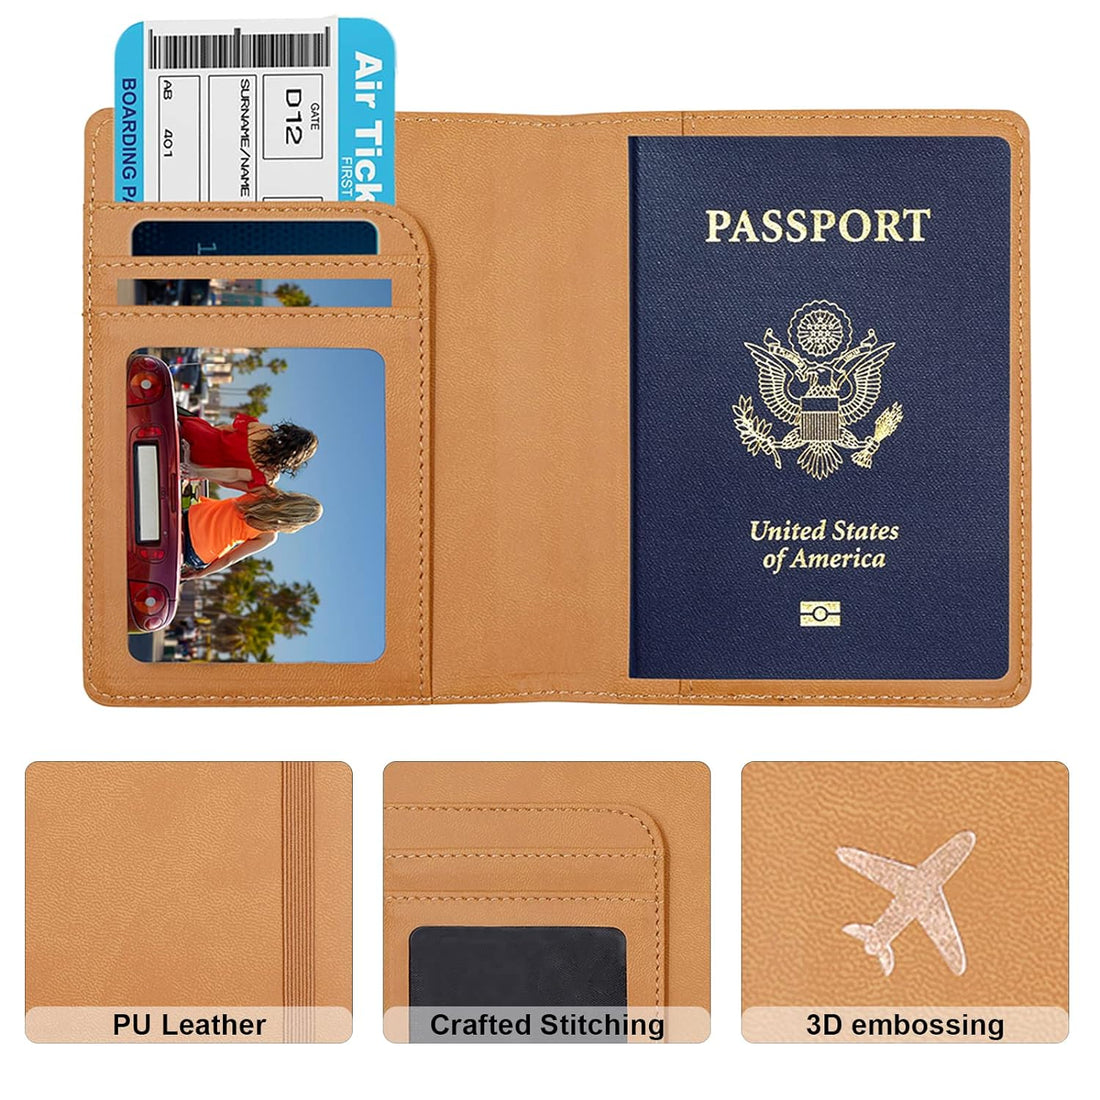 Deziliao Passport and Vaccine Card Holder Combo, PU Leather Passport Holder with Vaccine Card Slot, Passport Wallet for Men and Women, Brown, Basic